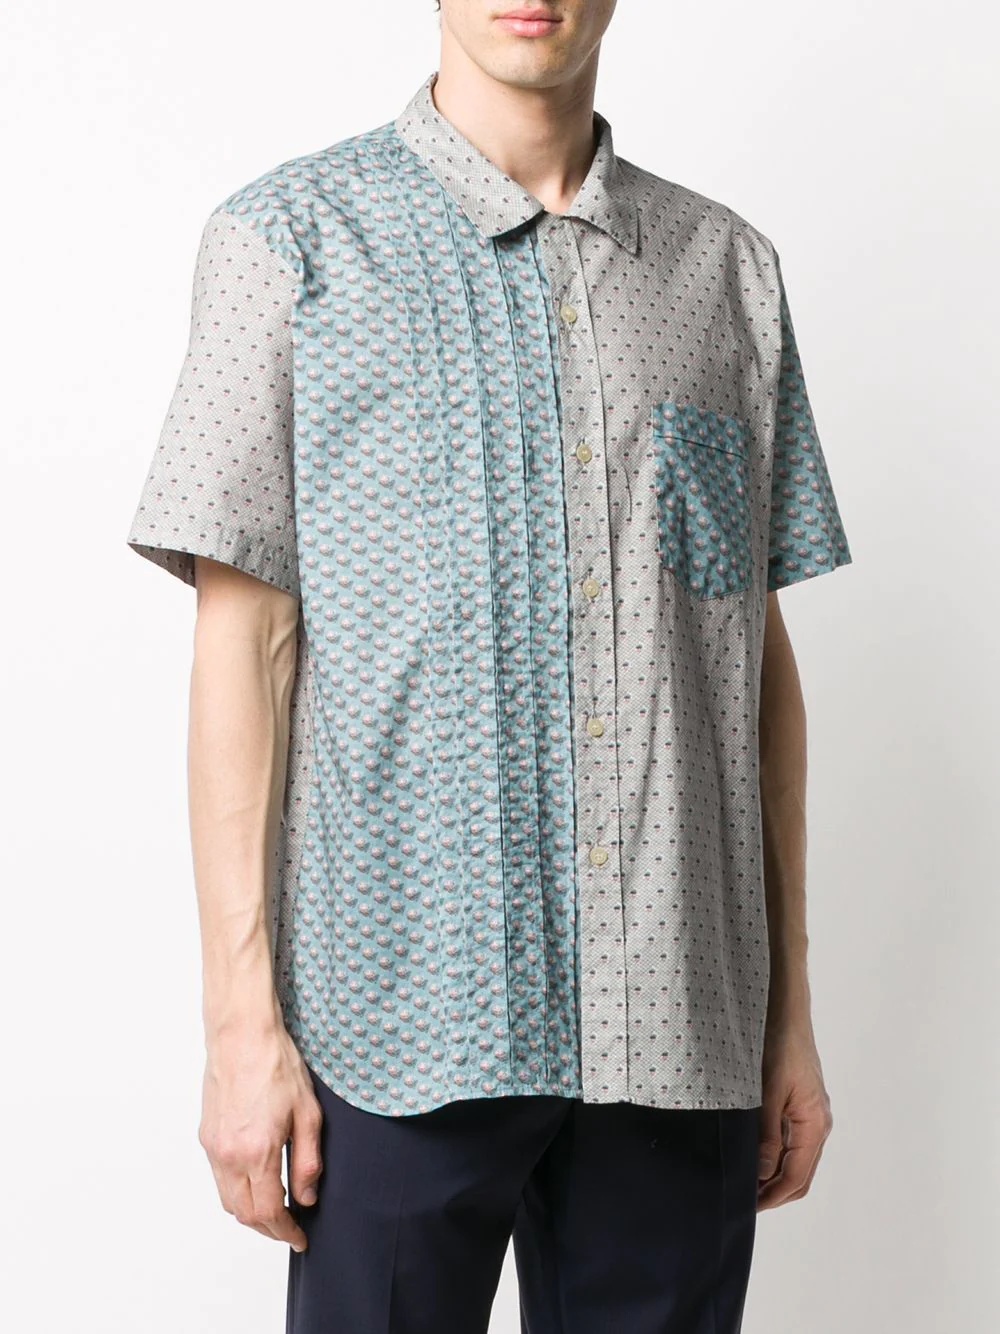 Carson panelled shirt - 3